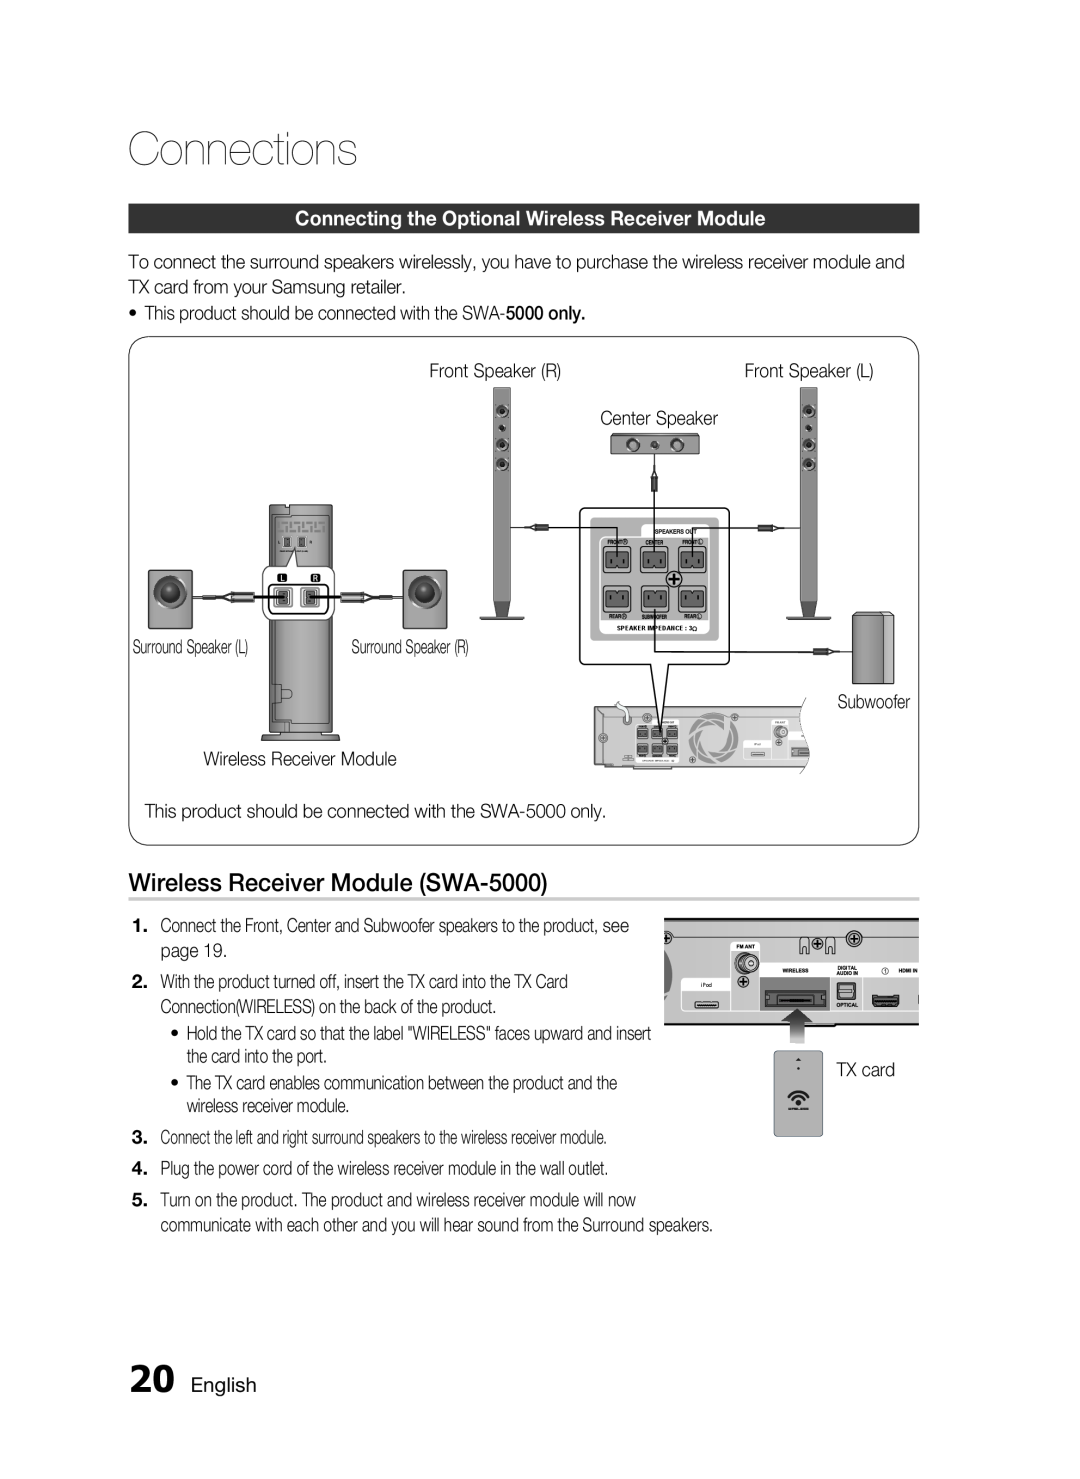 Samsung AH68-02255S, HT-C6530 Wireless Receiver Module SWA-5000, Connecting the Optional Wireless Receiver Module, English 